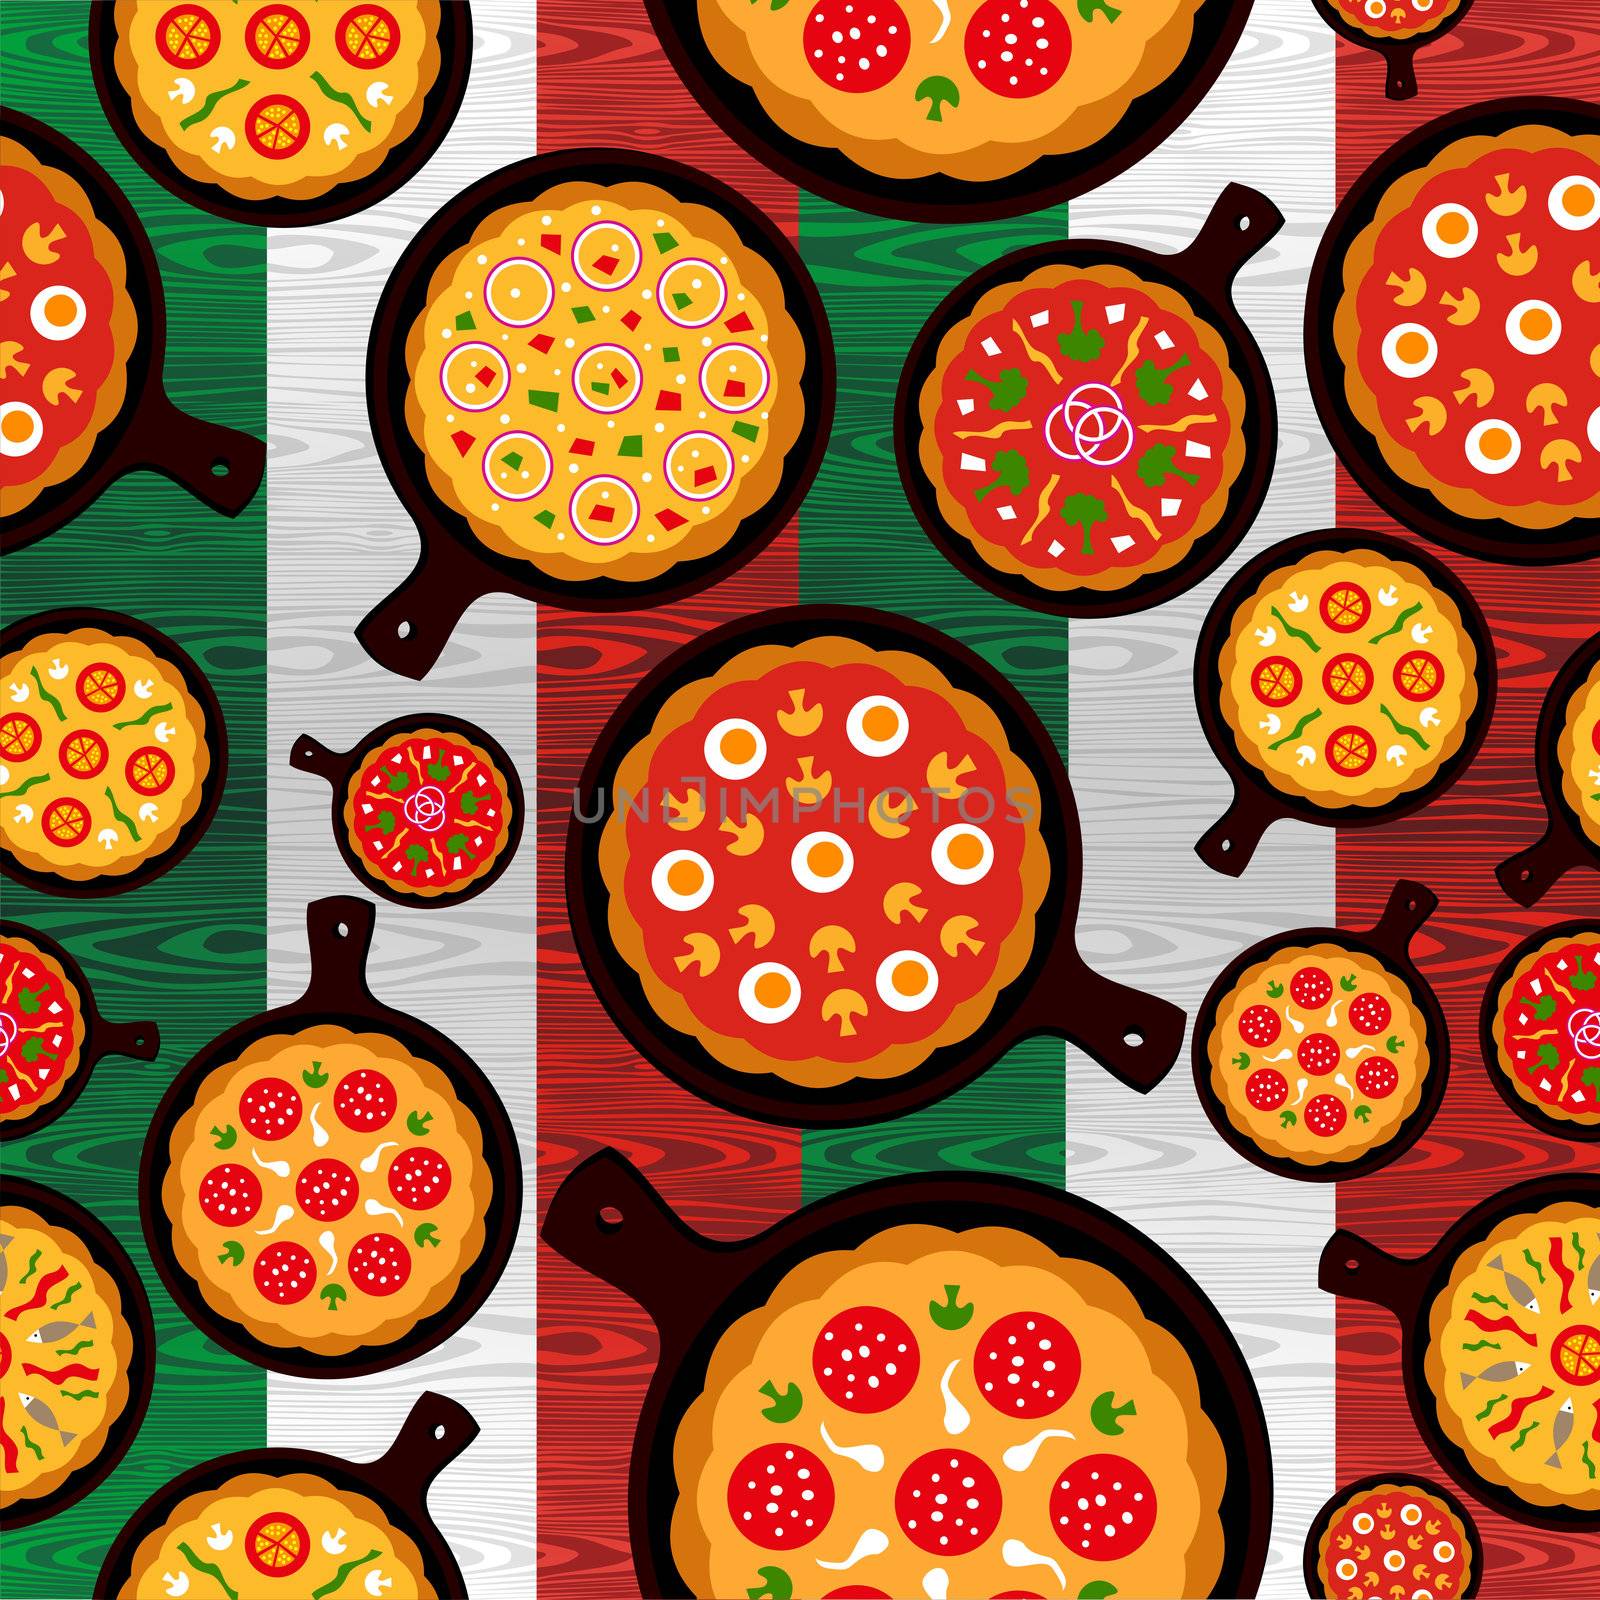 Italian pizza flavors pattern by cienpies